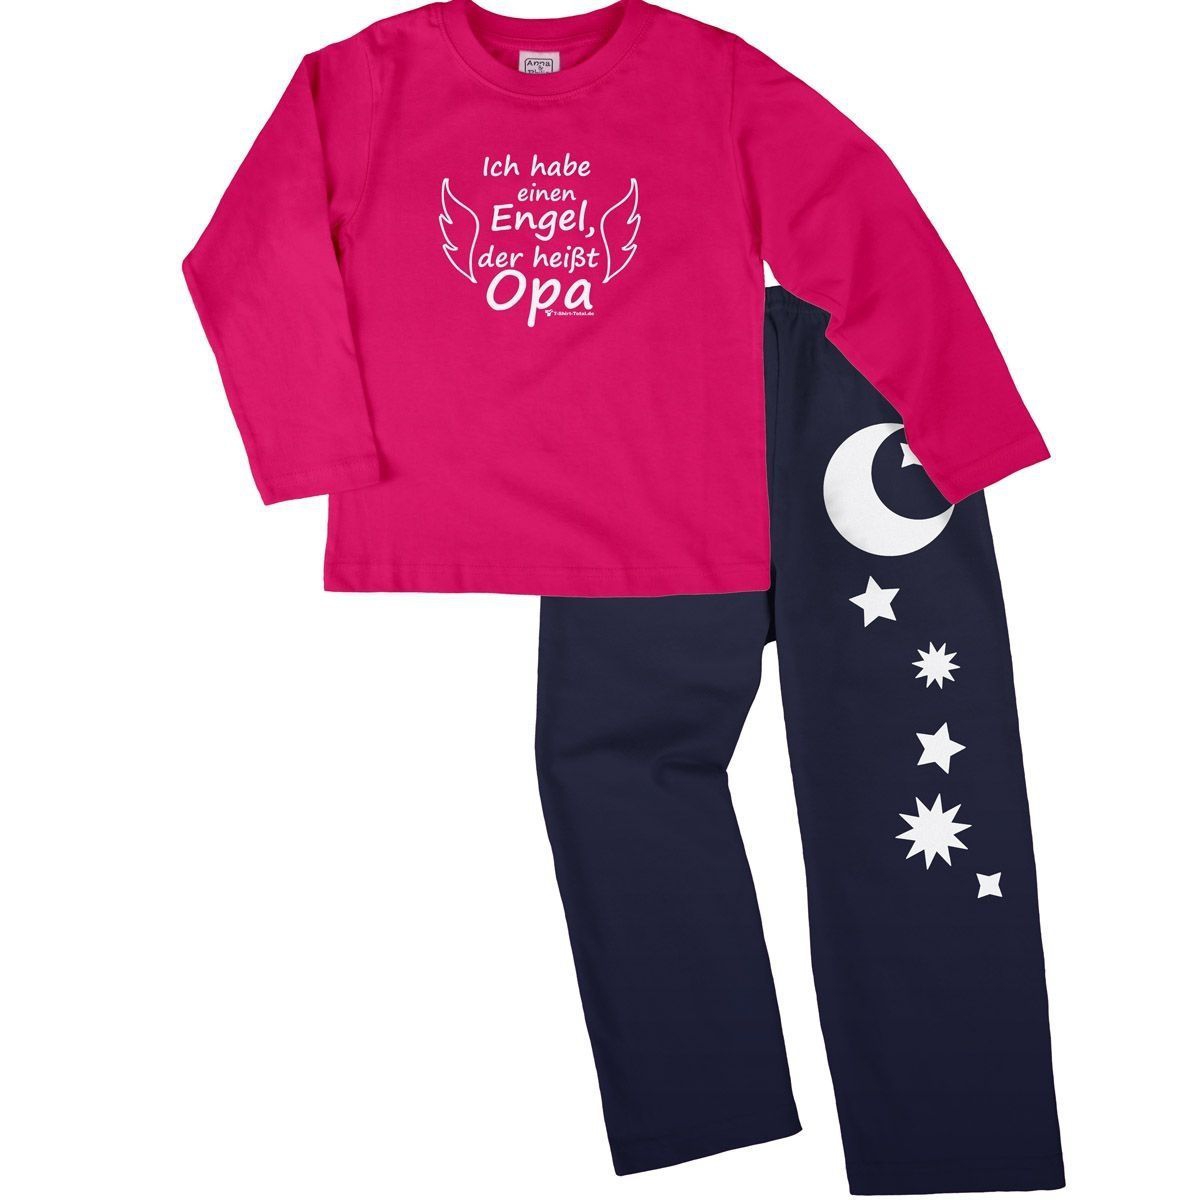 Engel Opa Pyjama Set pink / navy 110 / 116